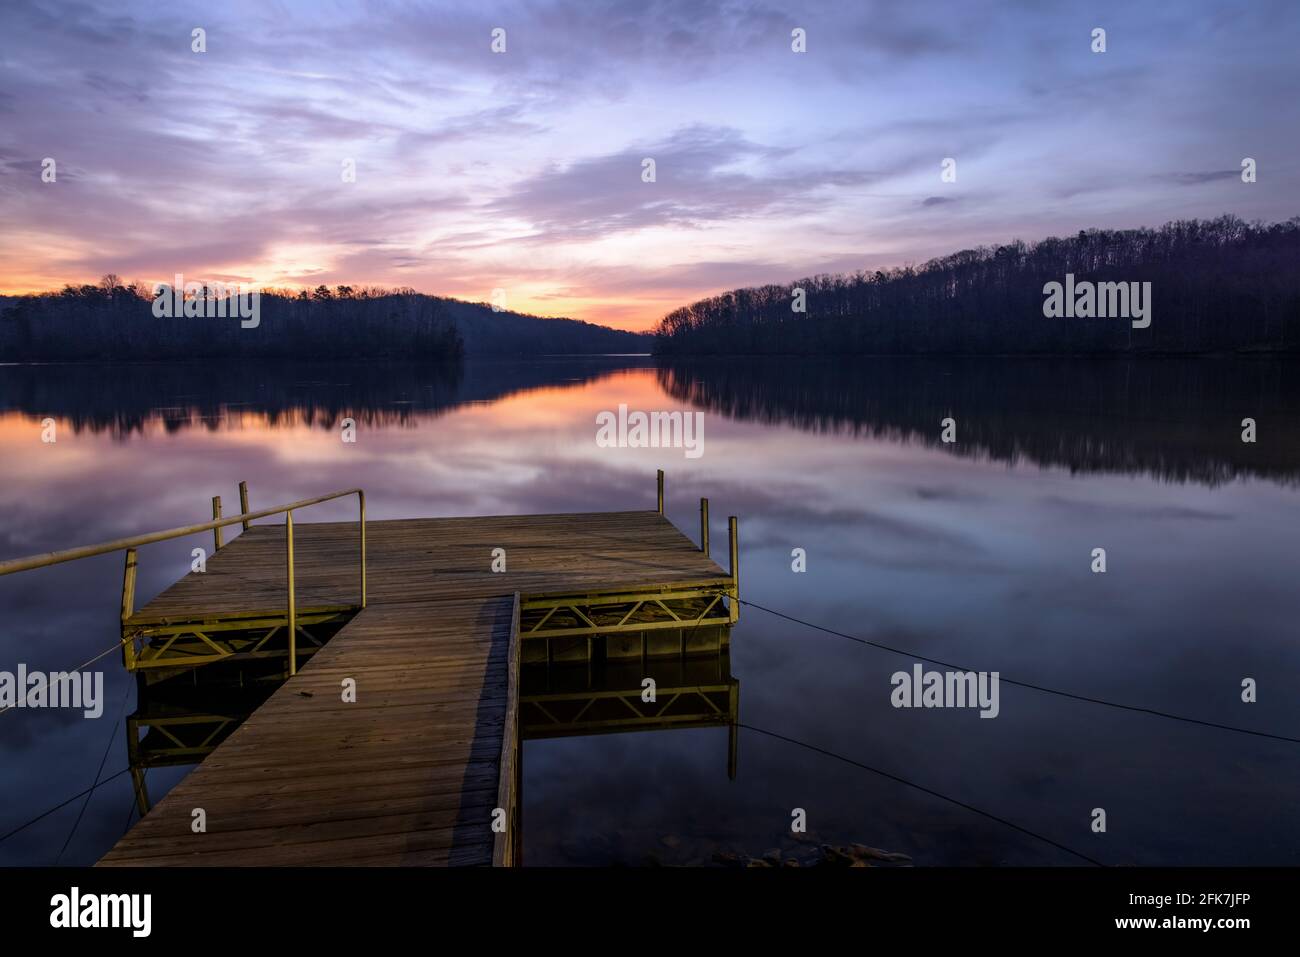 Sonnenaufgang - Wahoo Creek Park, Lake Sidney Lanier - Hall County, Georgia. Ein neuer Tag beginnt in den ruhigen Gewässern des Lake Sidney Lanier. Stockfoto